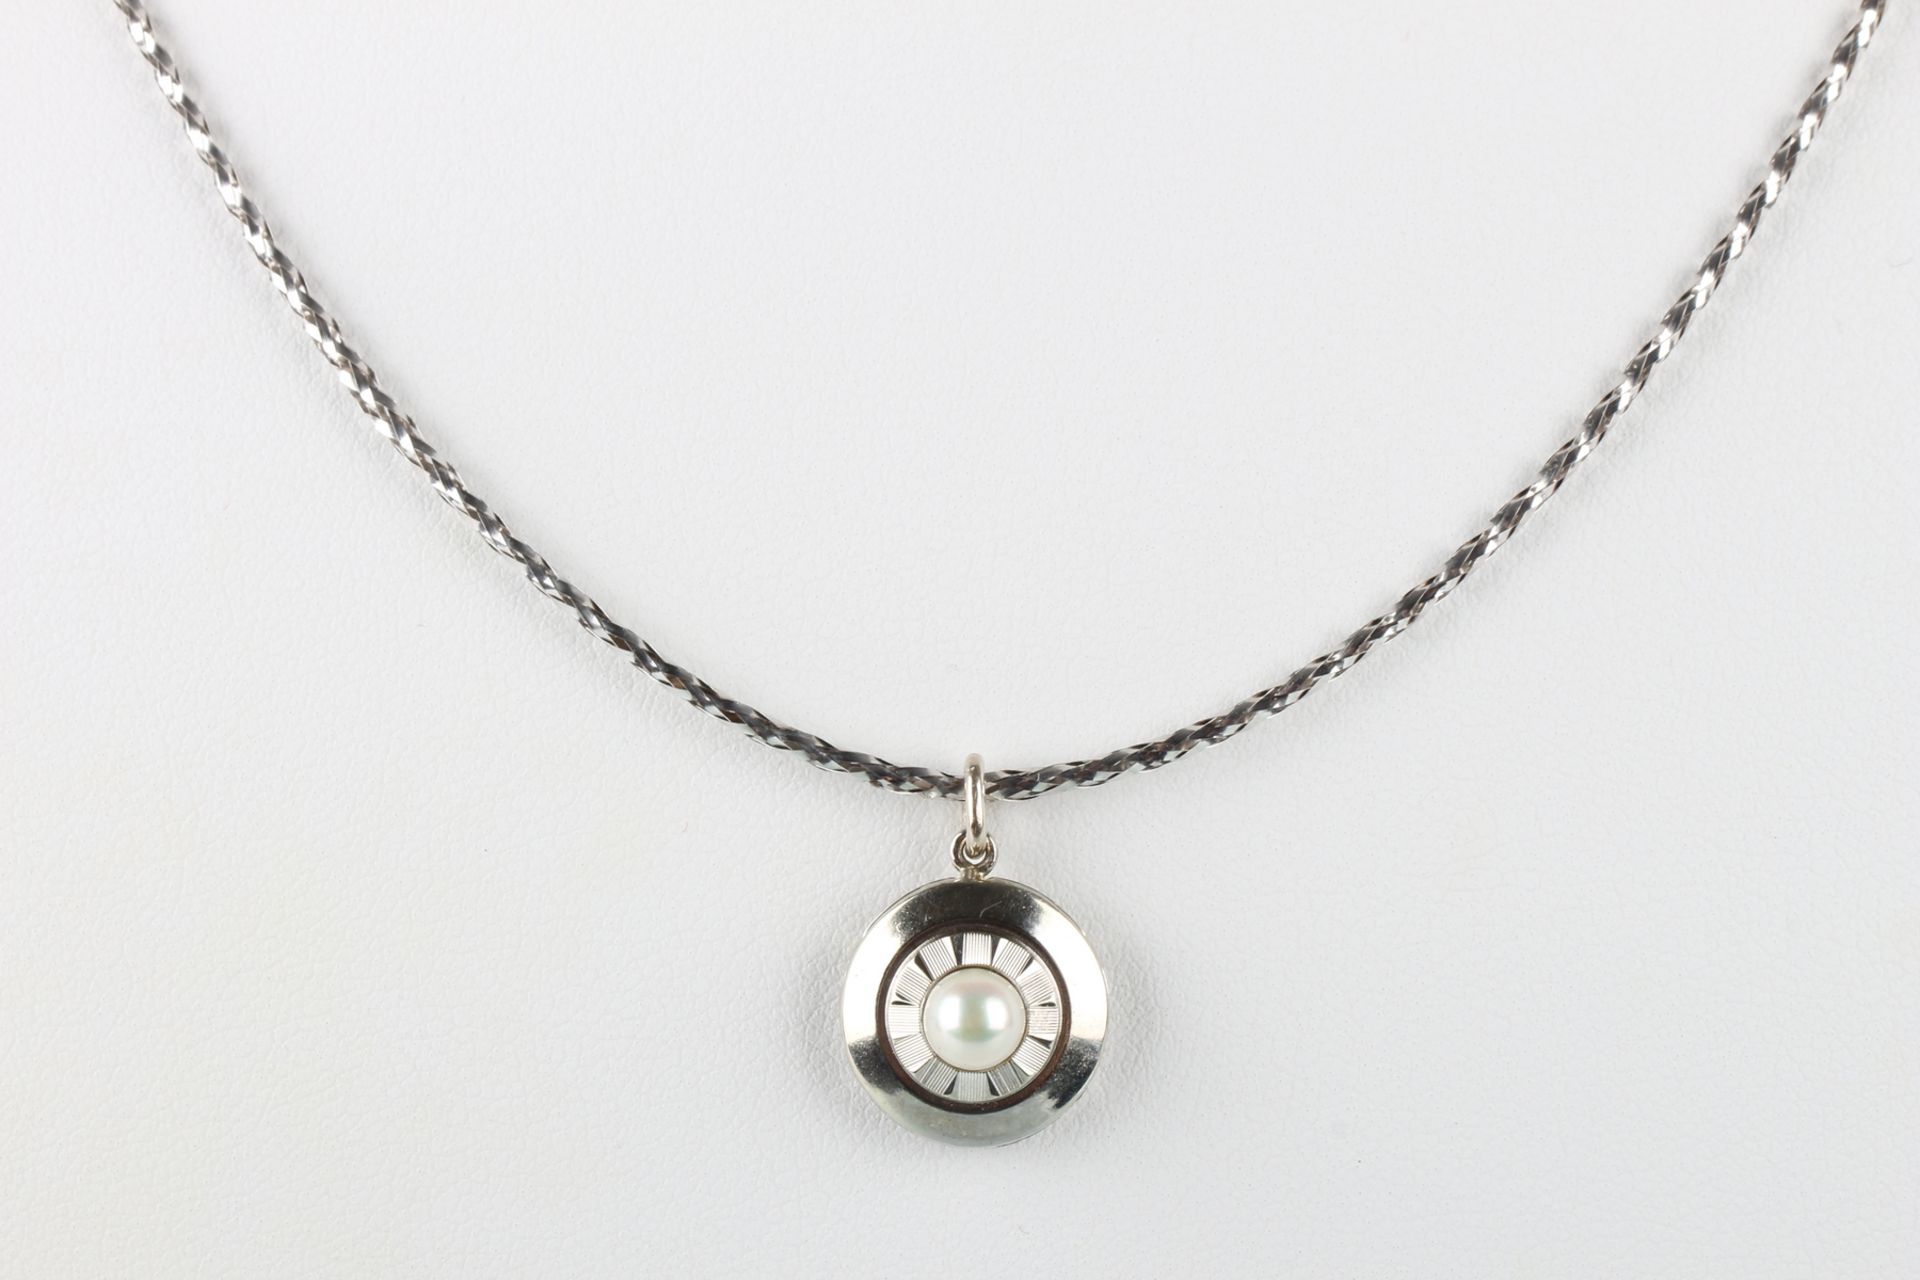 585 Gold Kette mit Perlenanhänger, gold necklace with pearl pendant, - Bild 2 aus 6